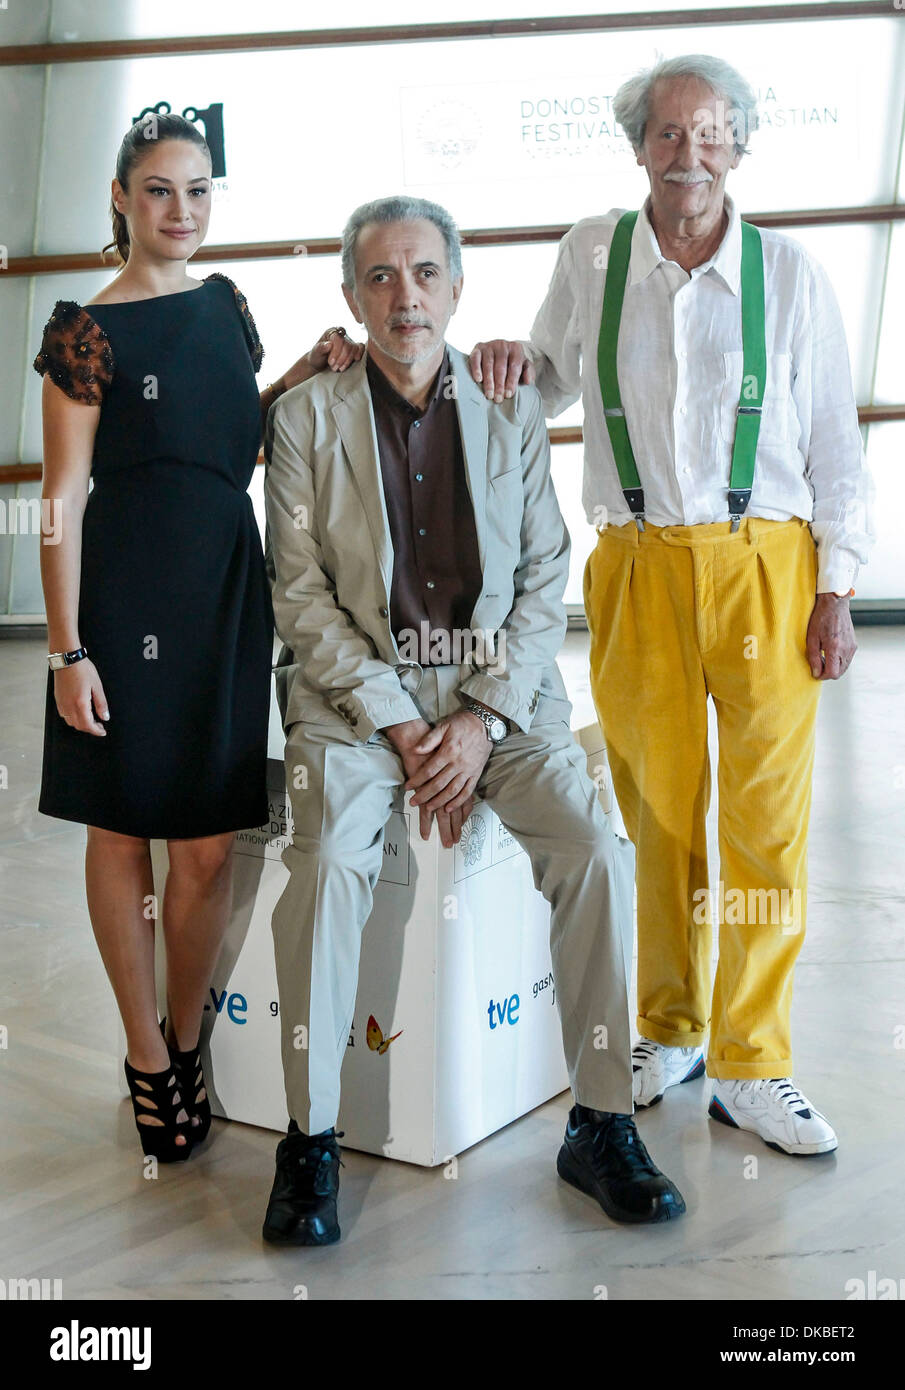 Spanish Actress Aida Folch Director Fernando Trueba and French Actor Jean Rochefort 'El artista y la modelo' photocall at Stock Photo